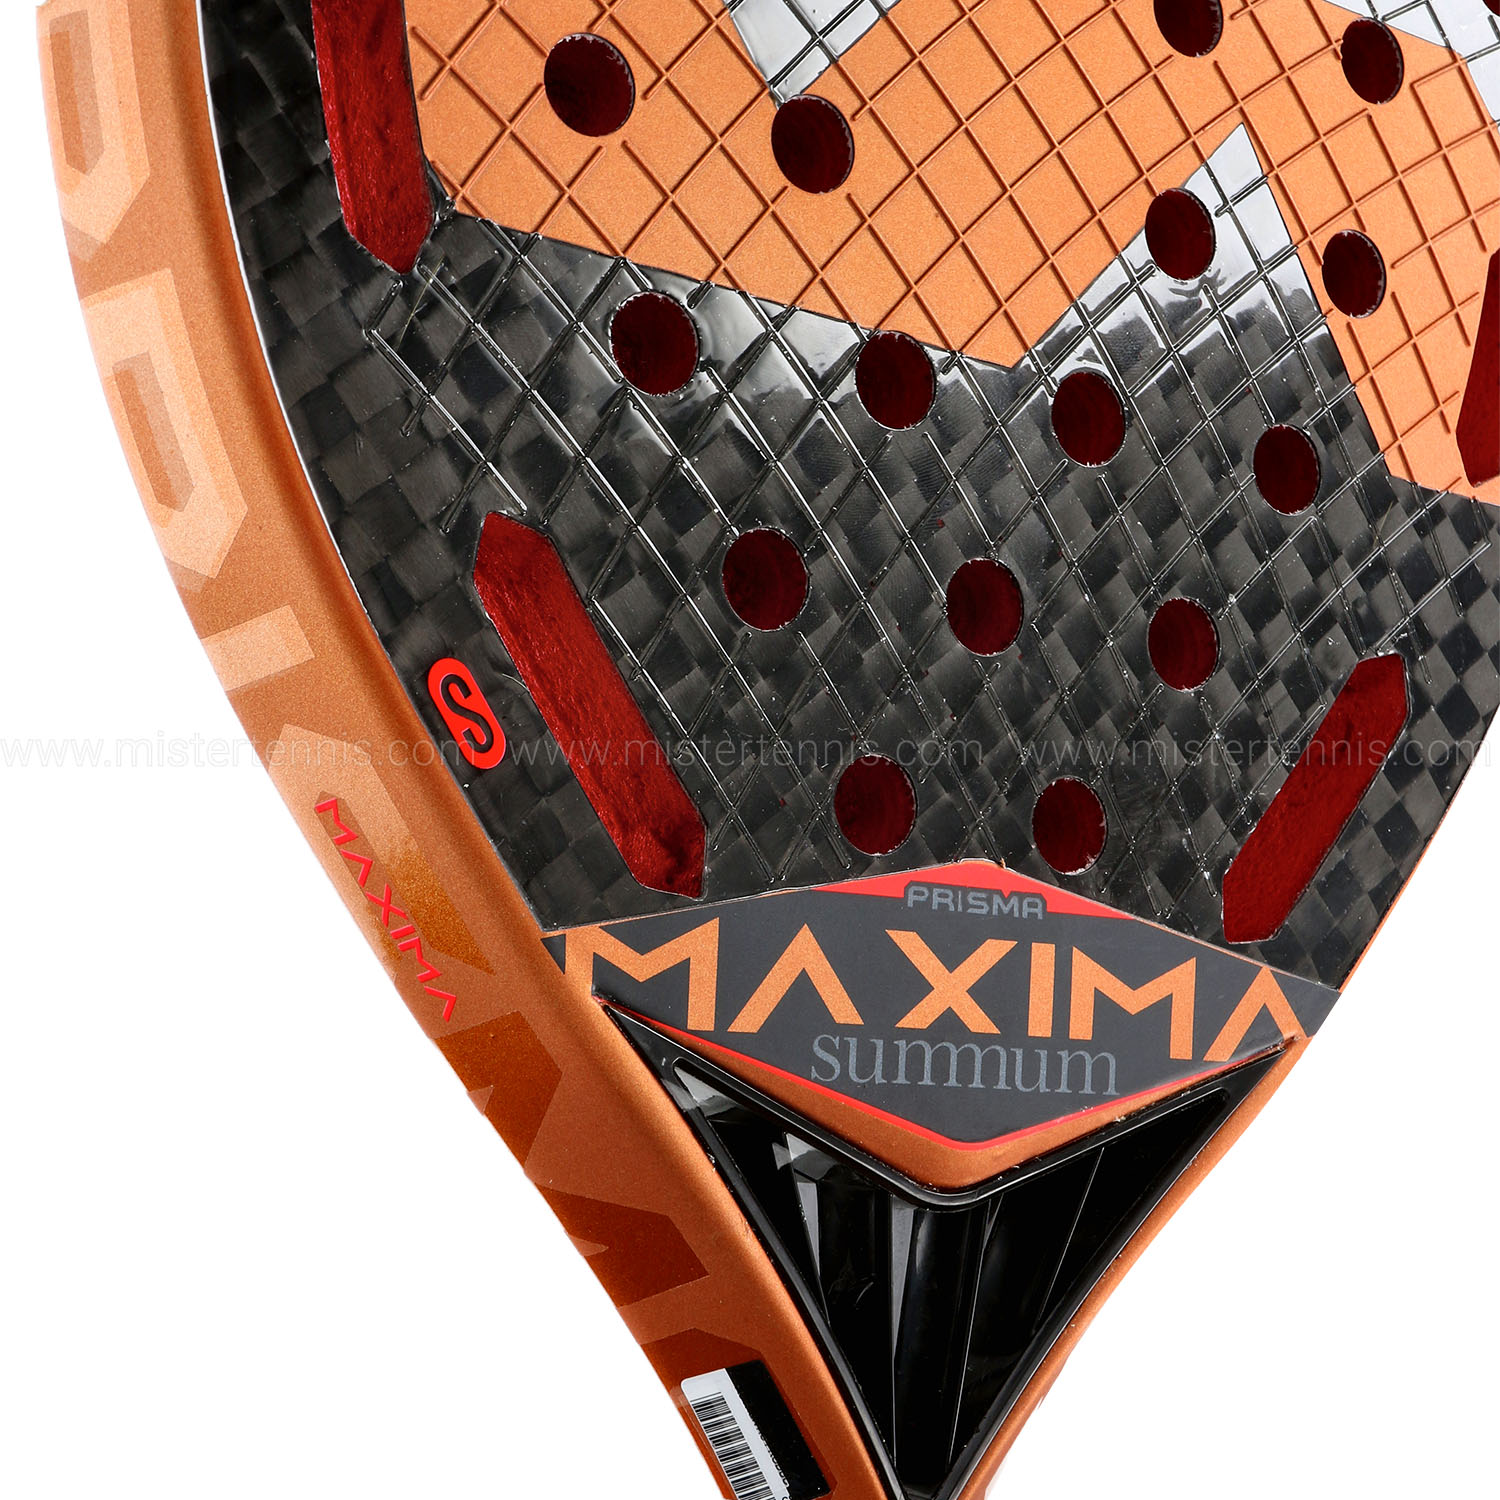 Varlion Maxima Summum Prisma Airflow S Padel - Brown/Black